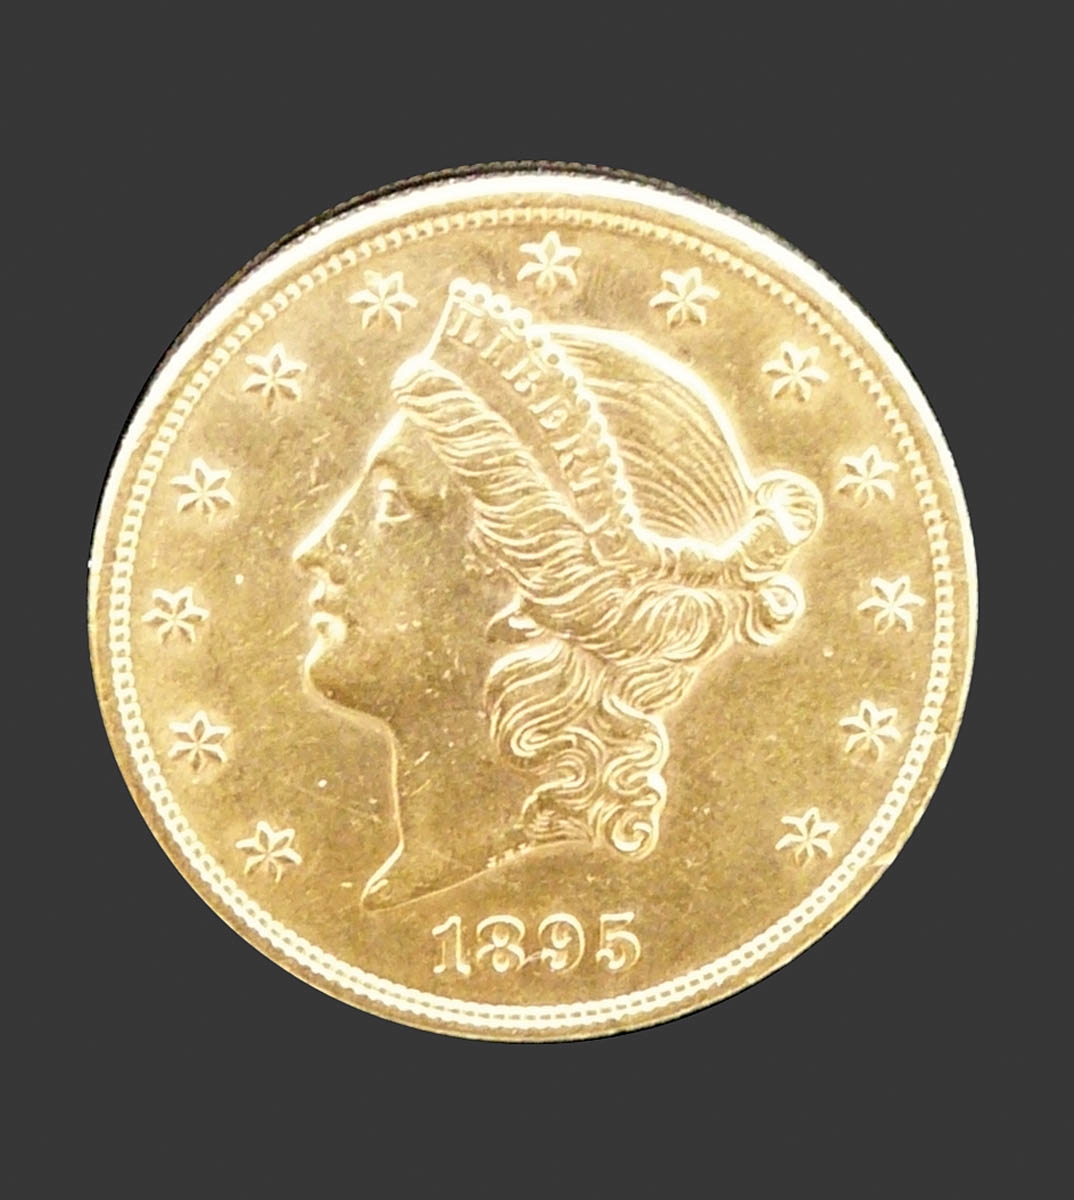 20 DollarUSA, 1895. 900er GG. D. 34 mm. Gew. 33,43 g. SS. Vs. Liberty mit Jahreszahl. Rs. Adler